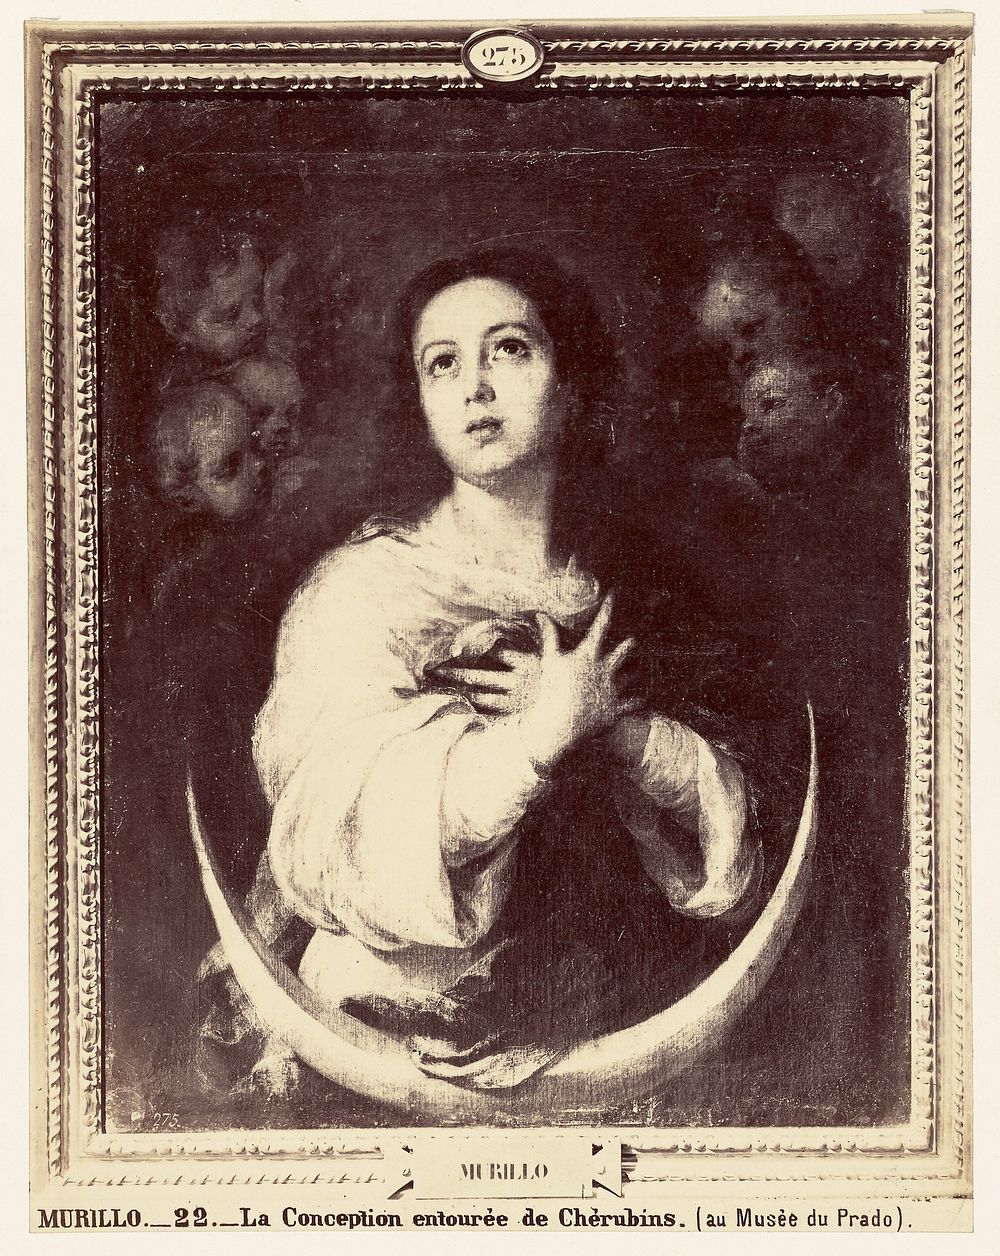 Murillo: La Conception entouree de Cherubins. (au Musee du Prado) by Juan Laurent